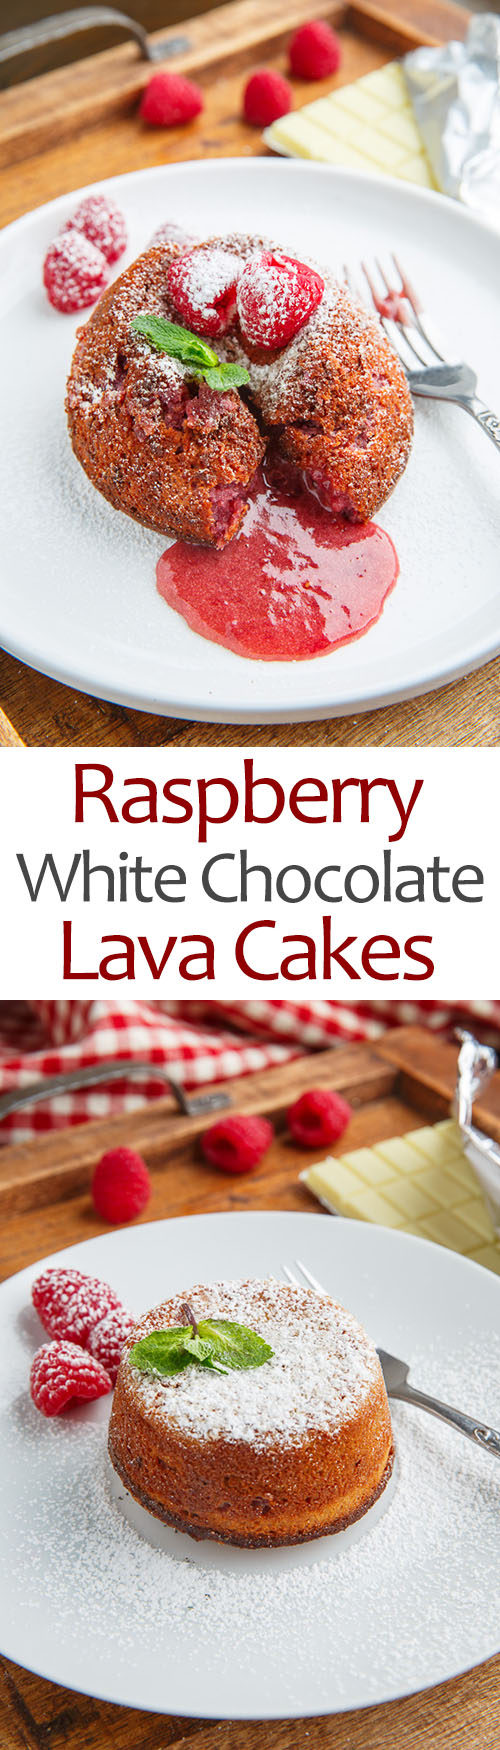 Raspberry White Chocolate Lava Cakes